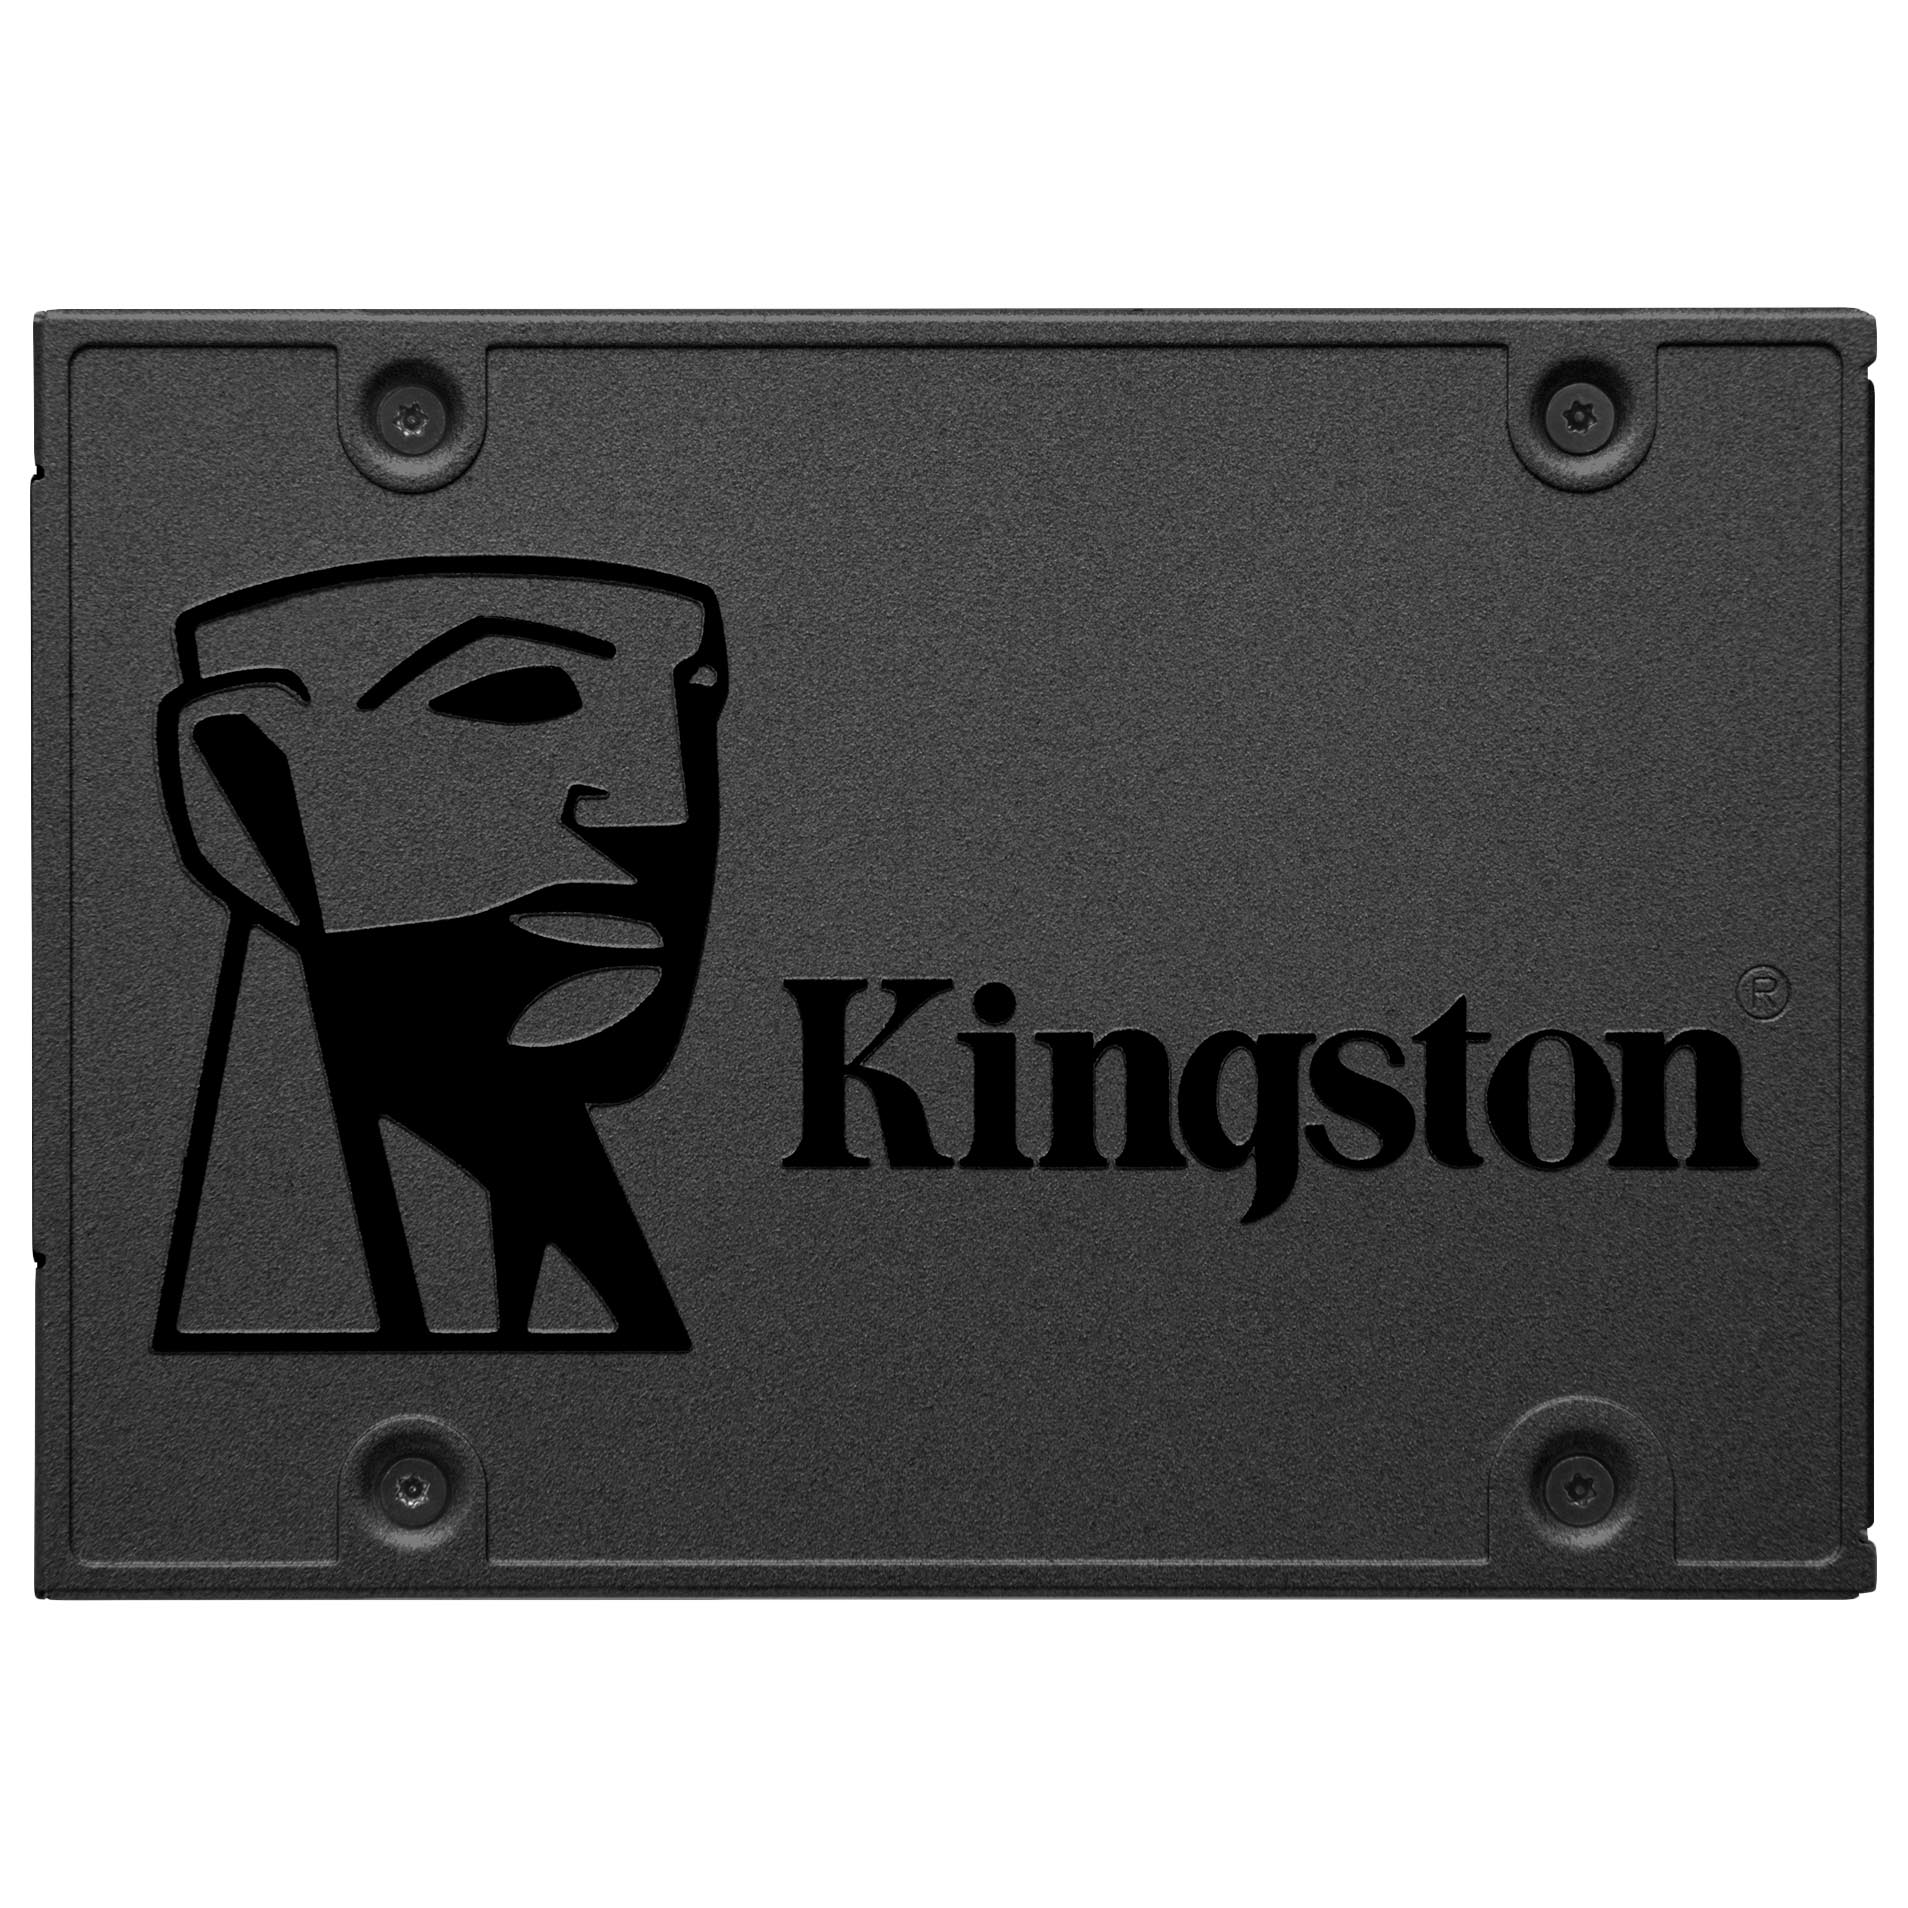 Внутренний твердотельный накопитель Kingston A400, SA400S37/960G, 960Гб, 2,5 твердотельный накопитель kingston a400 960gb sa400s37 960g